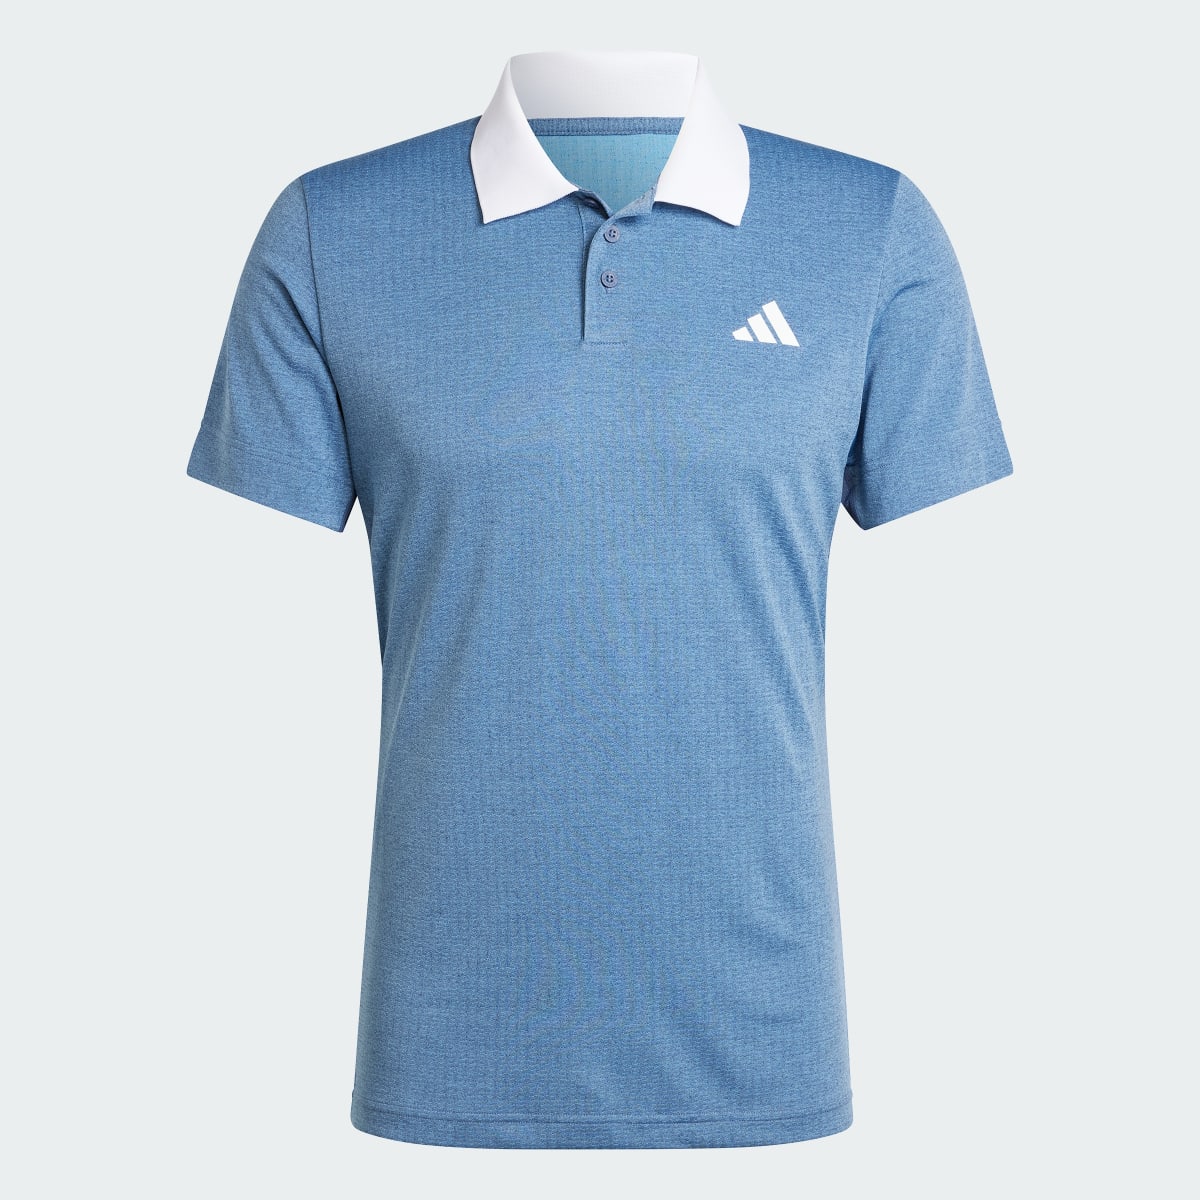 Adidas Tennis FreeLift Polo Shirt. 5